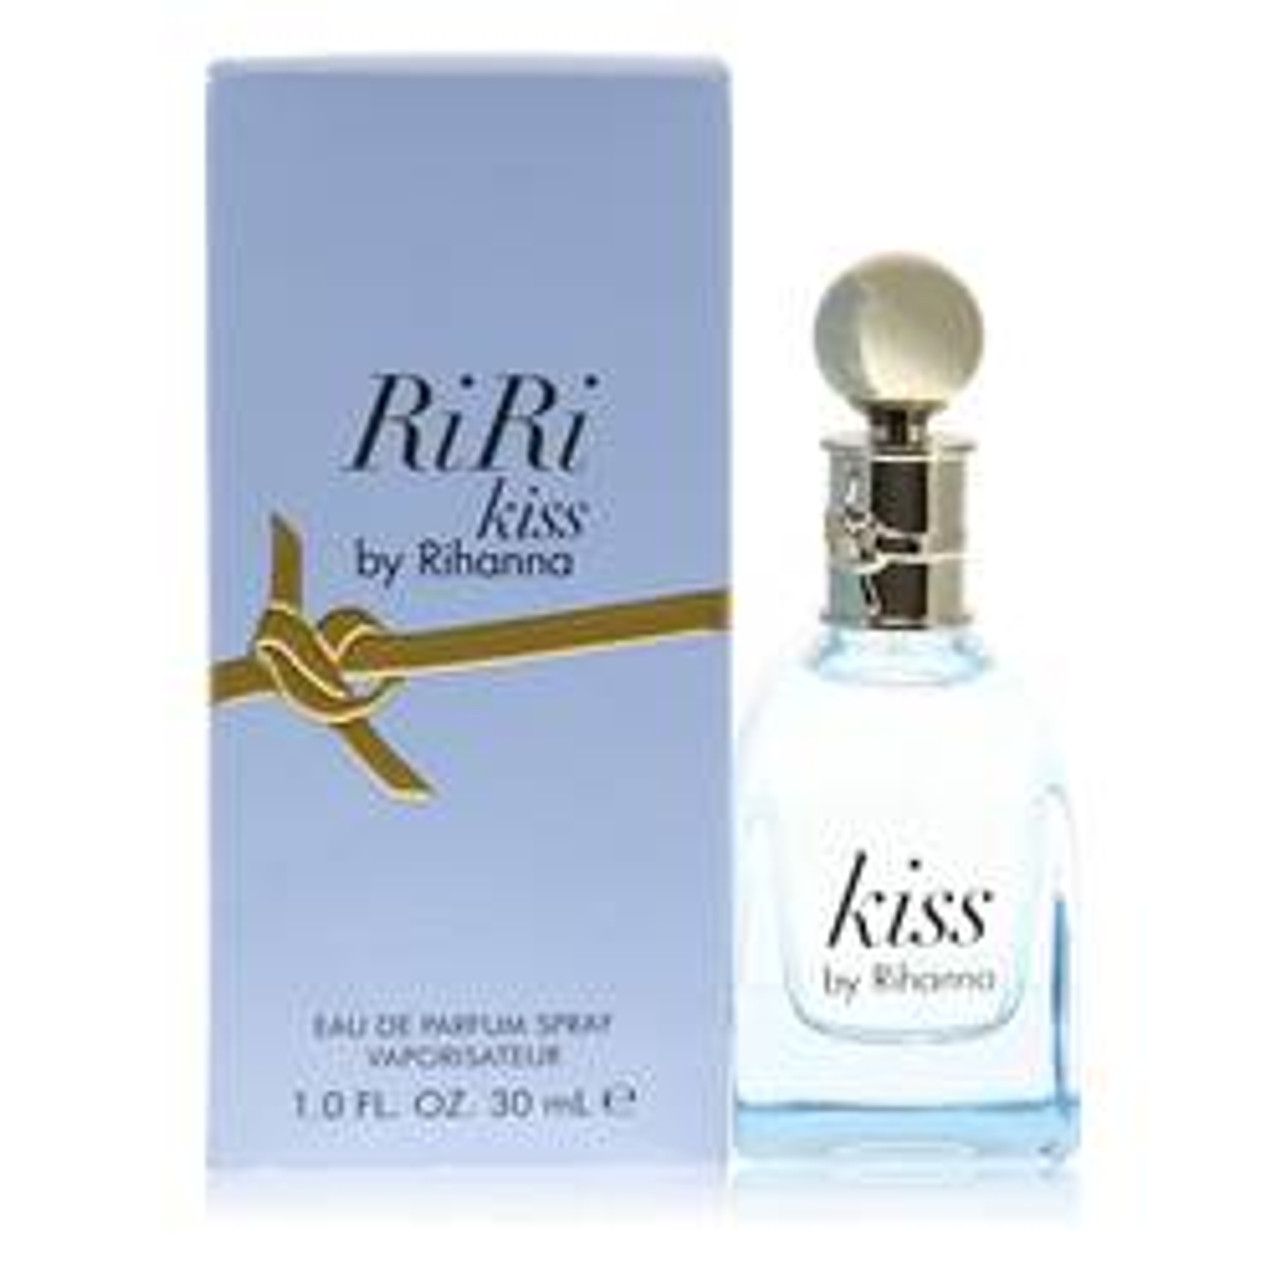 Rihanna Kiss Perfume By Rihanna Eau De Parfum Spray 1 oz for Women - [From 50.33 - Choose pk Qty ] - *Ships from Miami